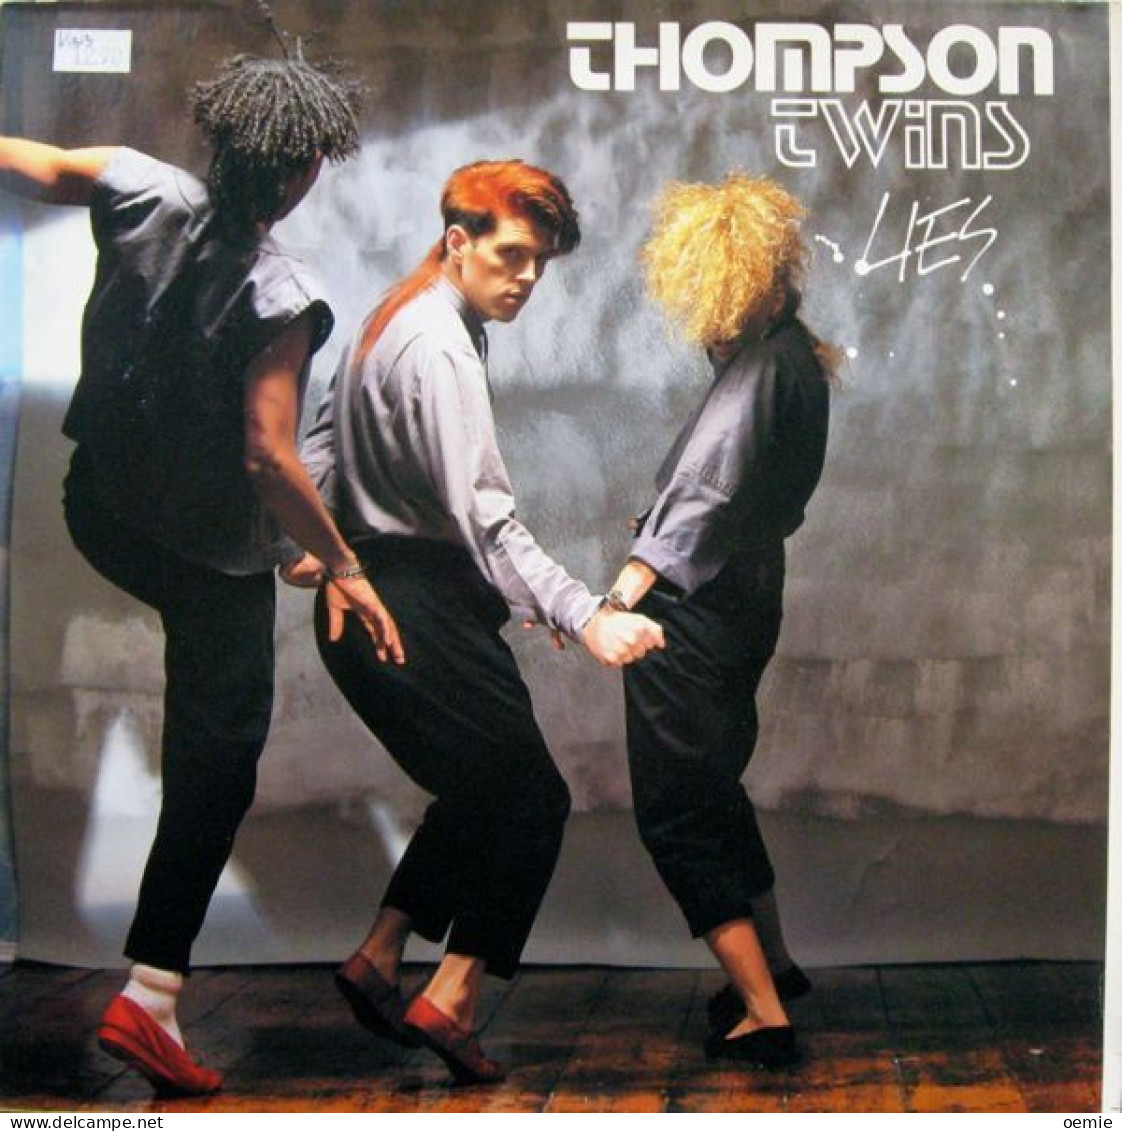 THOMPSON TWINS  LIES - 45 Rpm - Maxi-Singles